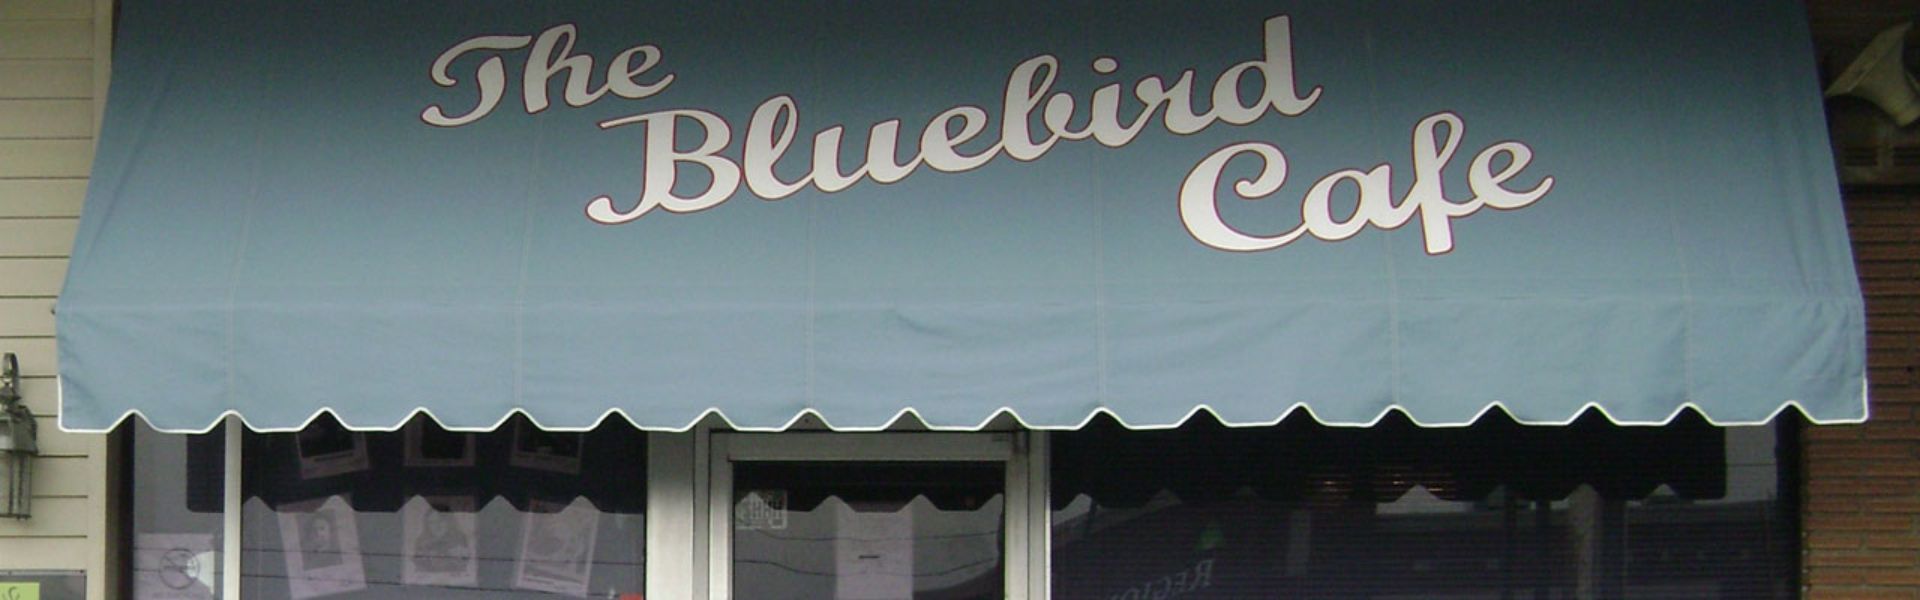 Bluebird Cafe Tennessee Tourism 02Dec22